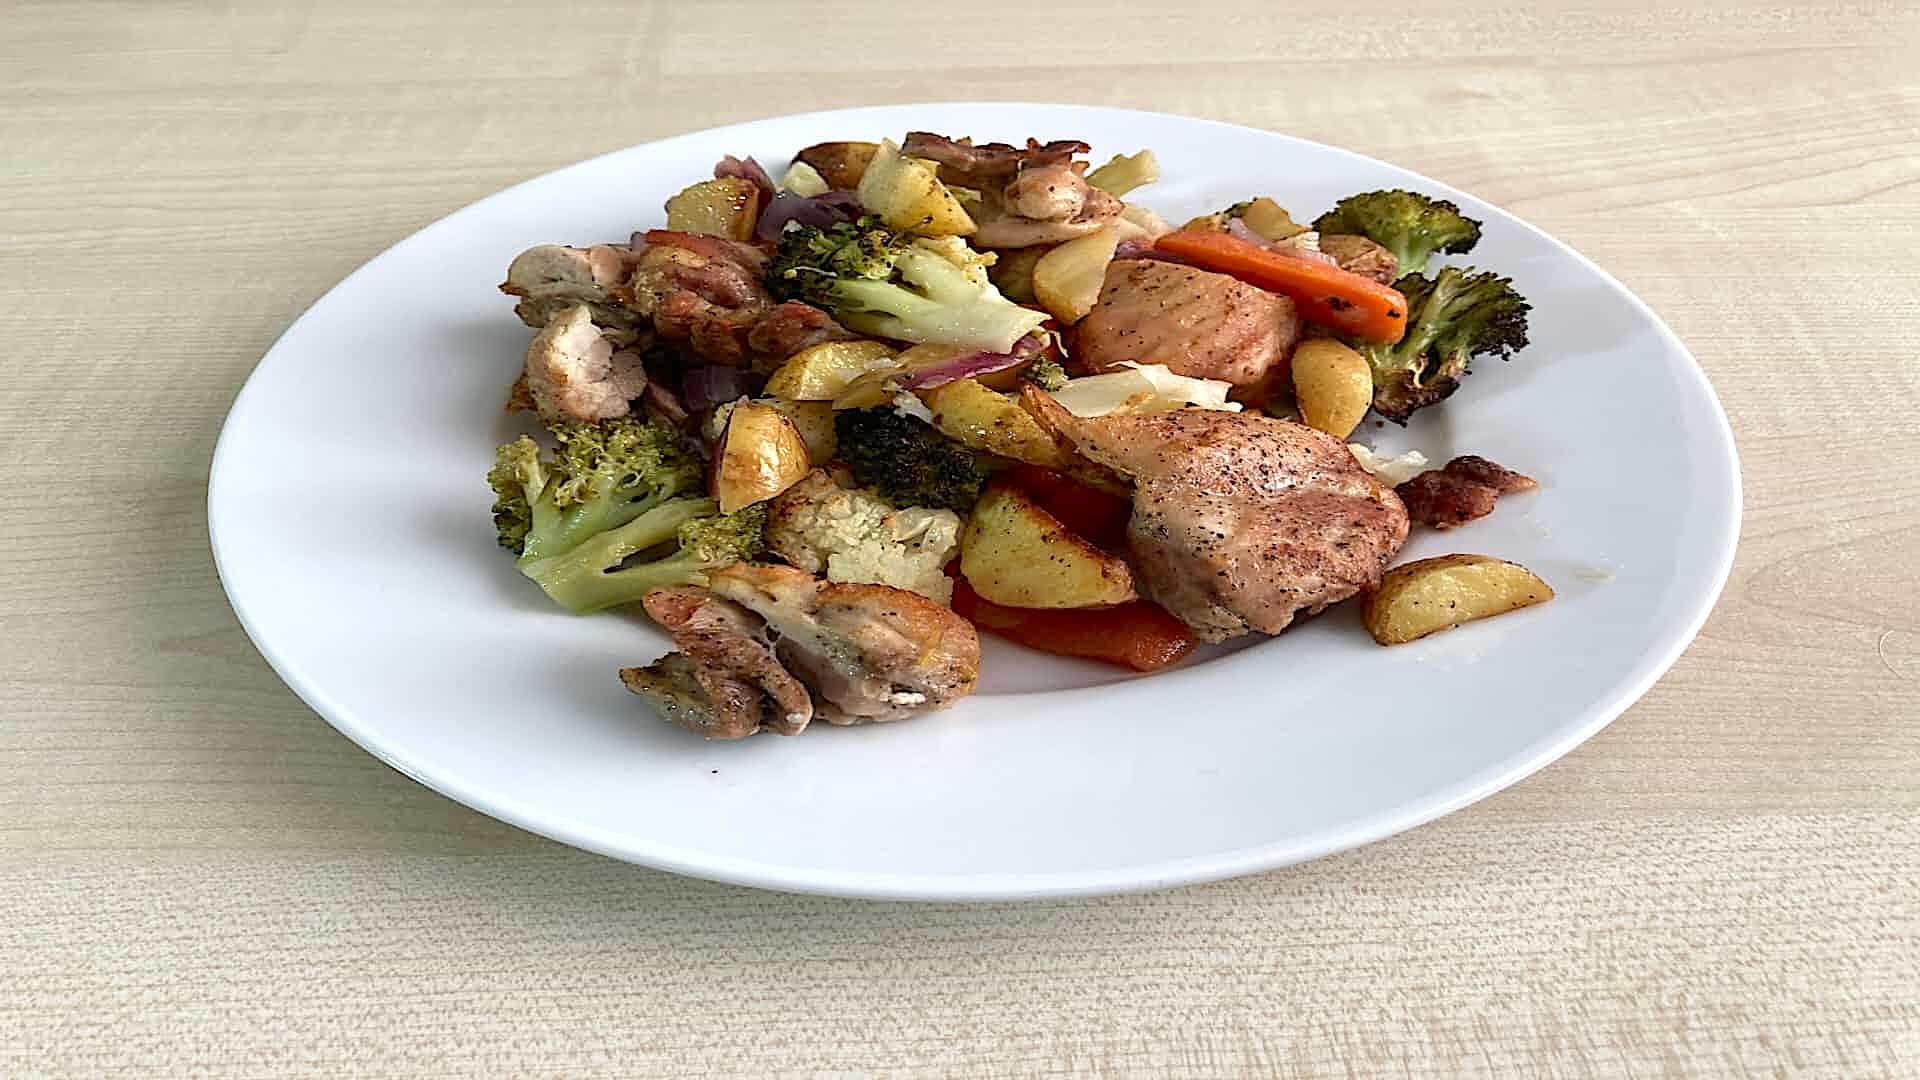 Traybake kipdijfilet met groentemix en aardappelpartjes